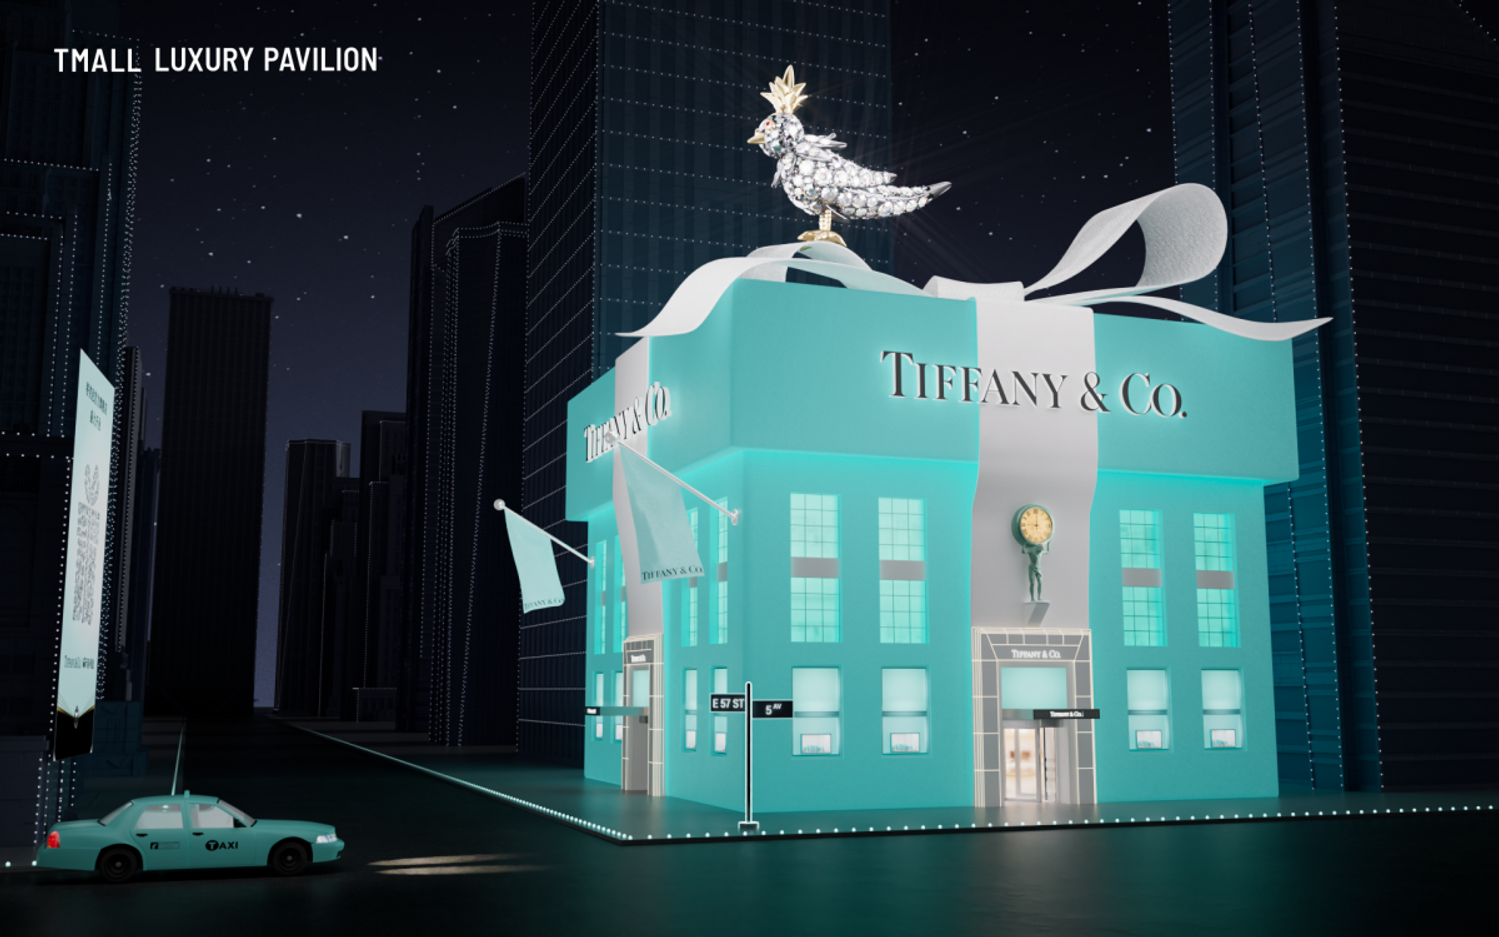 tiffany & co chine luxury pavilion digital alibaba